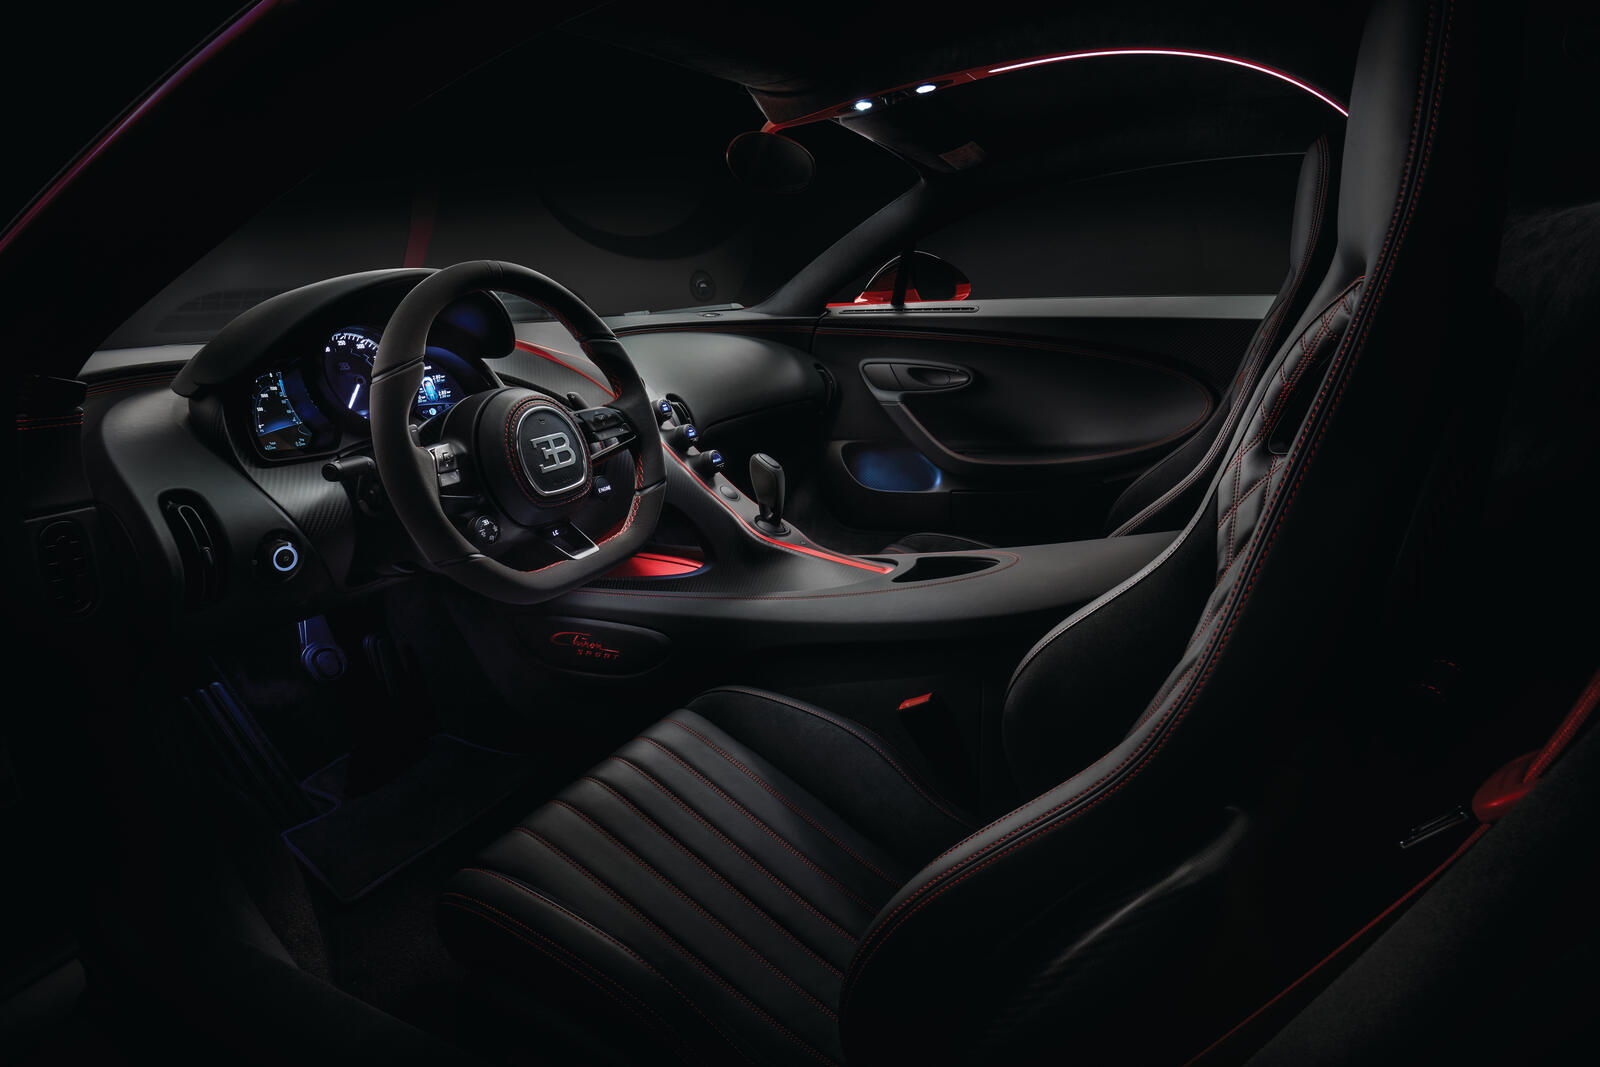 Wallpapers Bugatti Chiron interior cars on the desktop